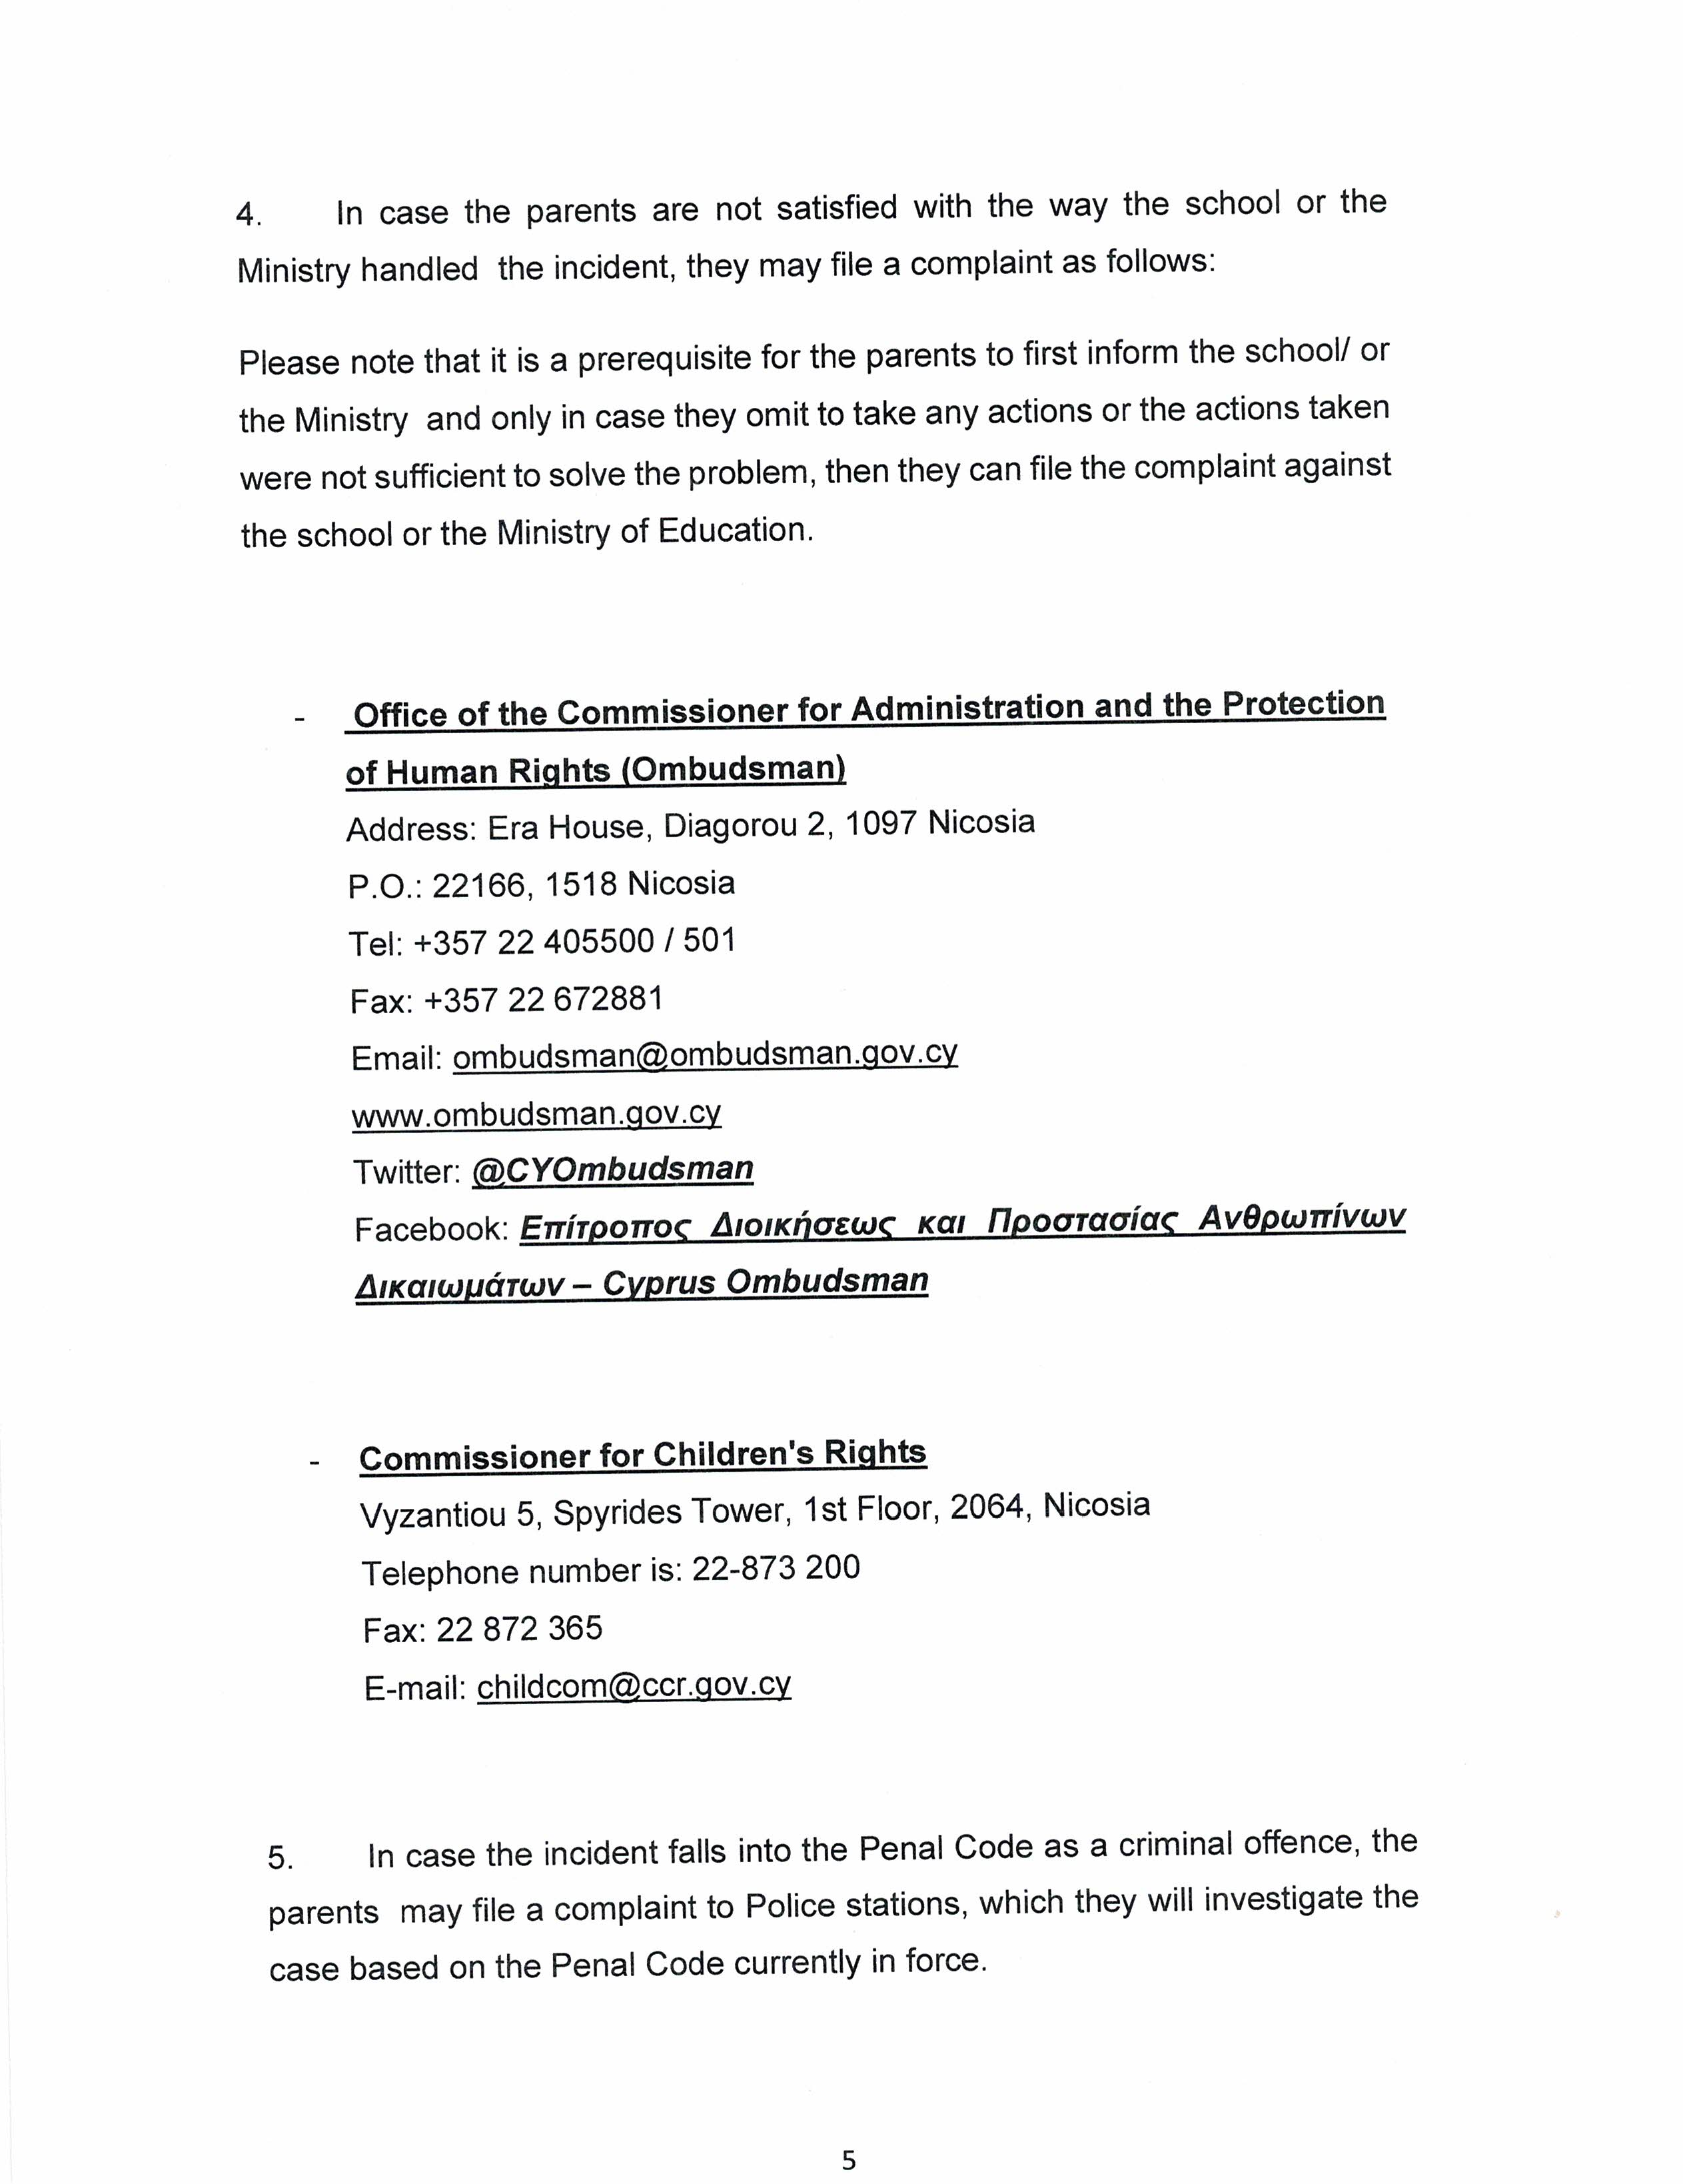 Ombudsman letter page 5